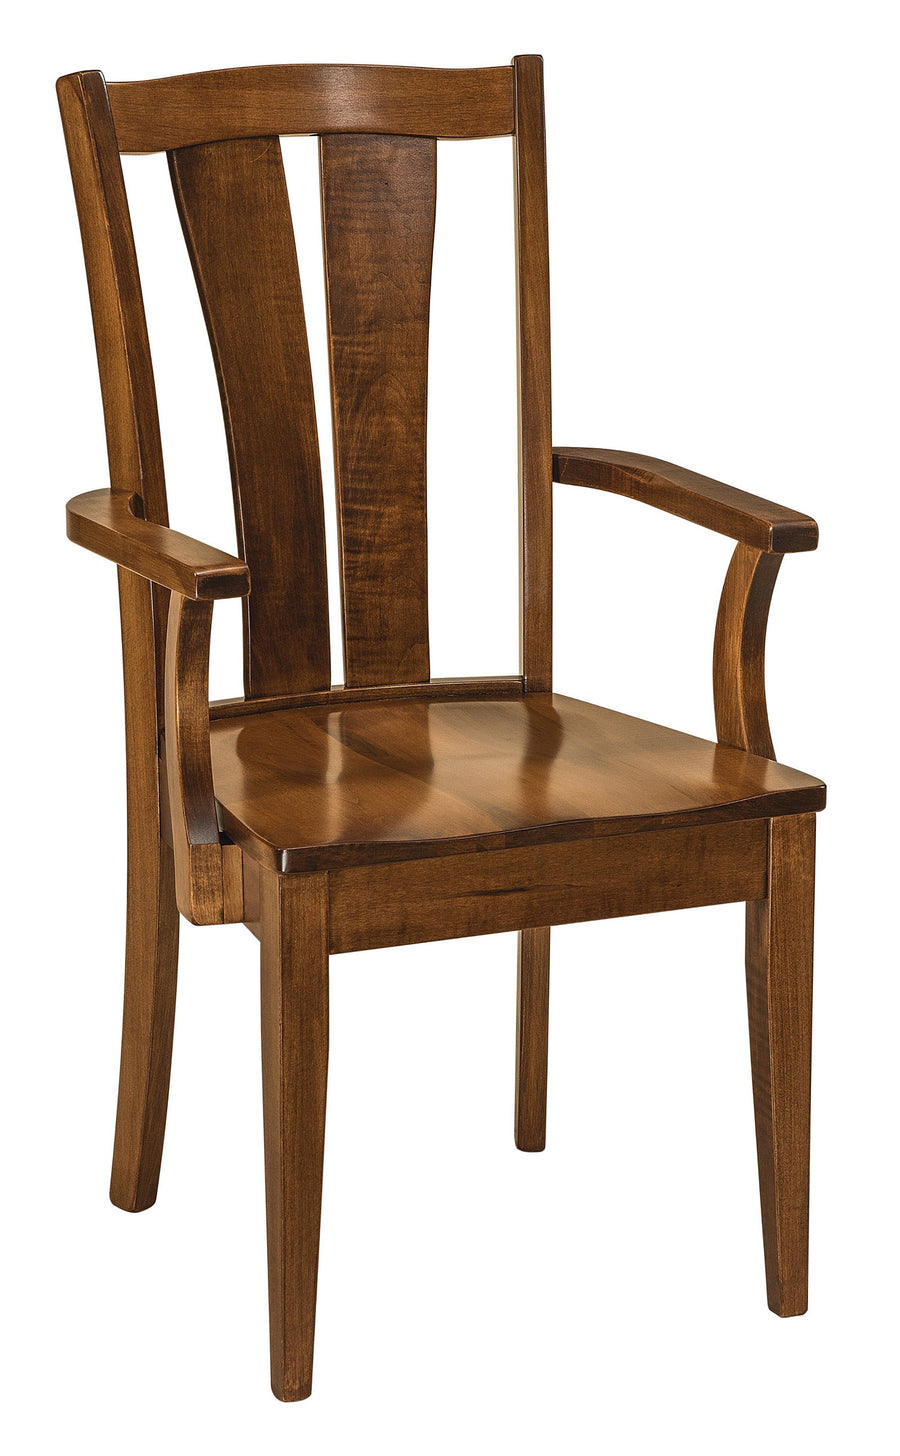 Brawley Amish Arm Chair - Charleston Amish Furniture